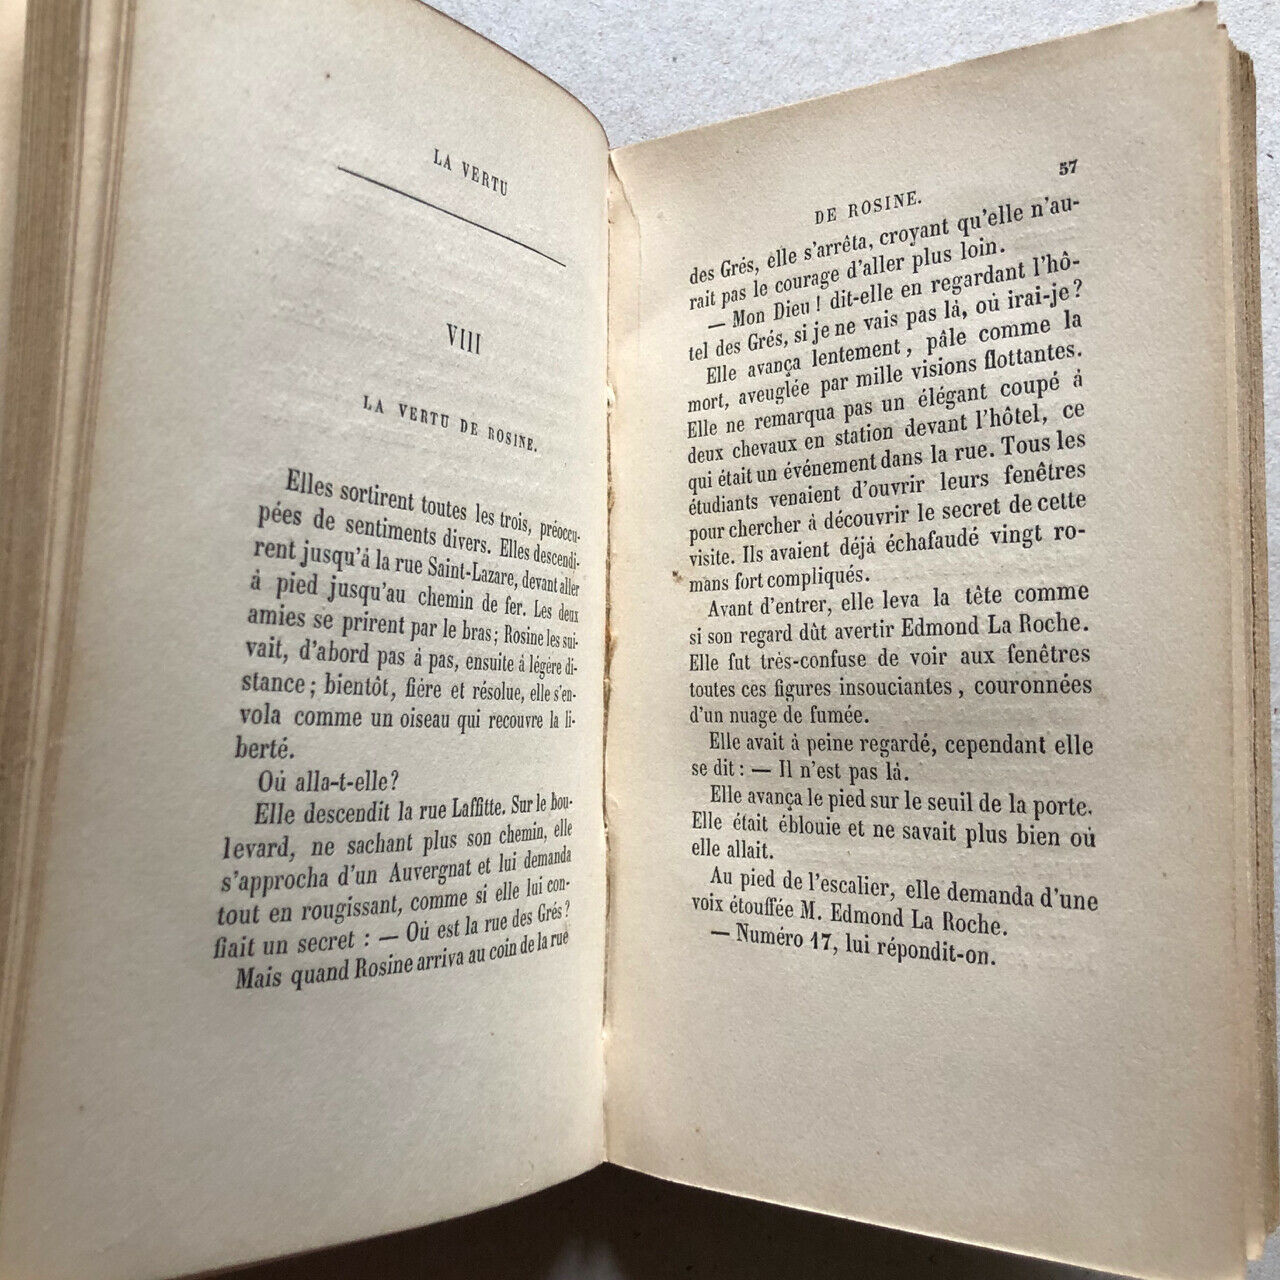 Arsène Houssaye — The Virtue of Rosine — original edition — Eugène Didier — 1852.